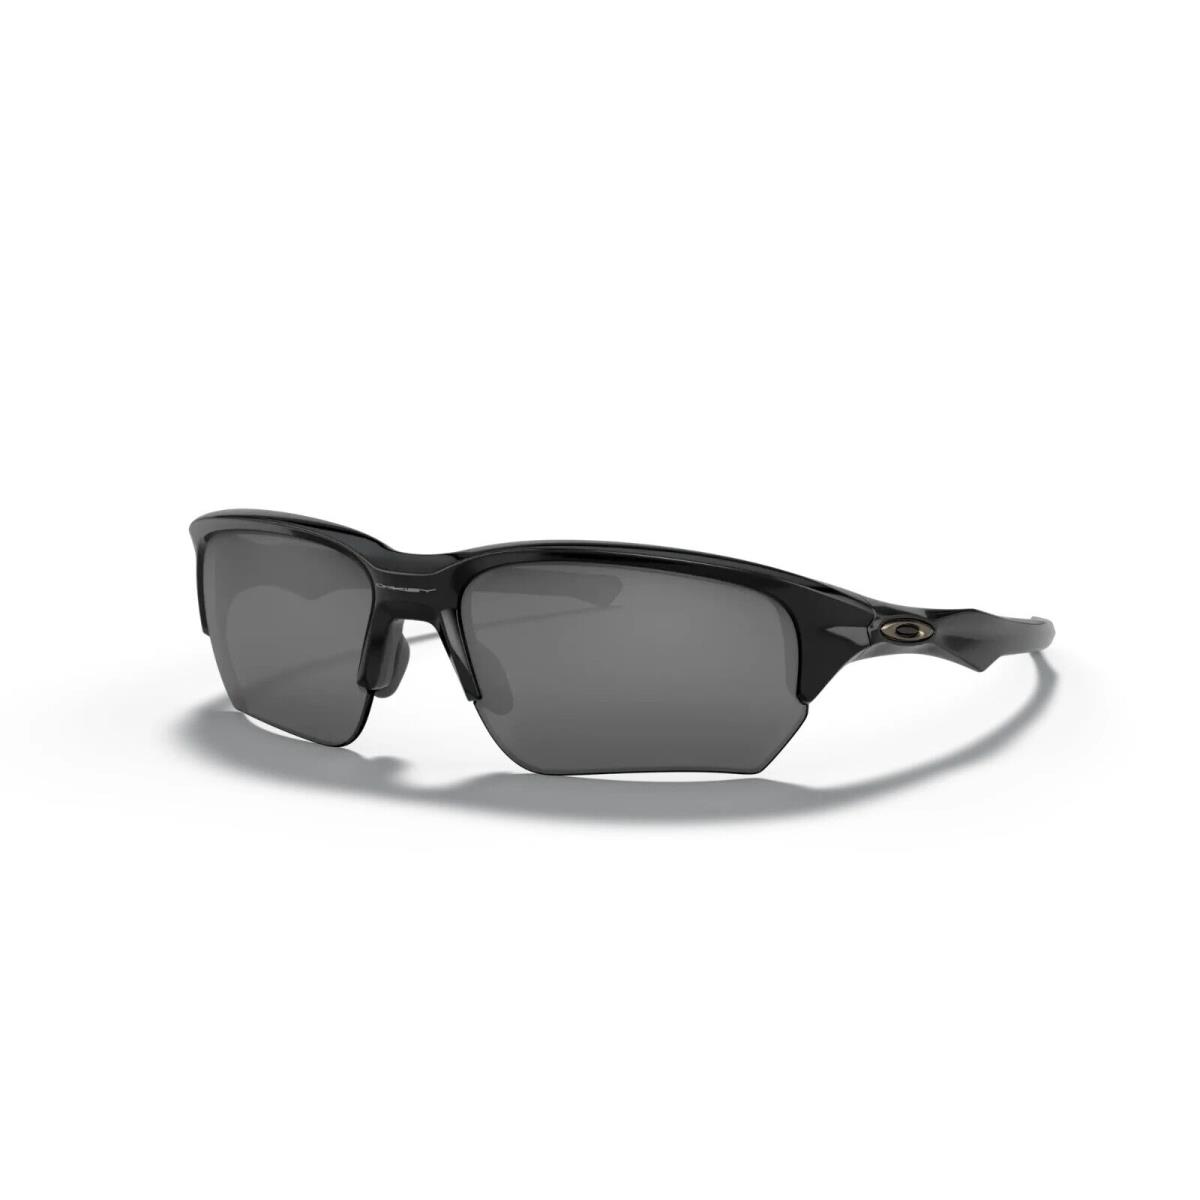 Oakley 9363-02 Mens Flak Beta Sunglasses Polished Black w/ Black Iridium - Polished Black Frame, Black Iridium Lens